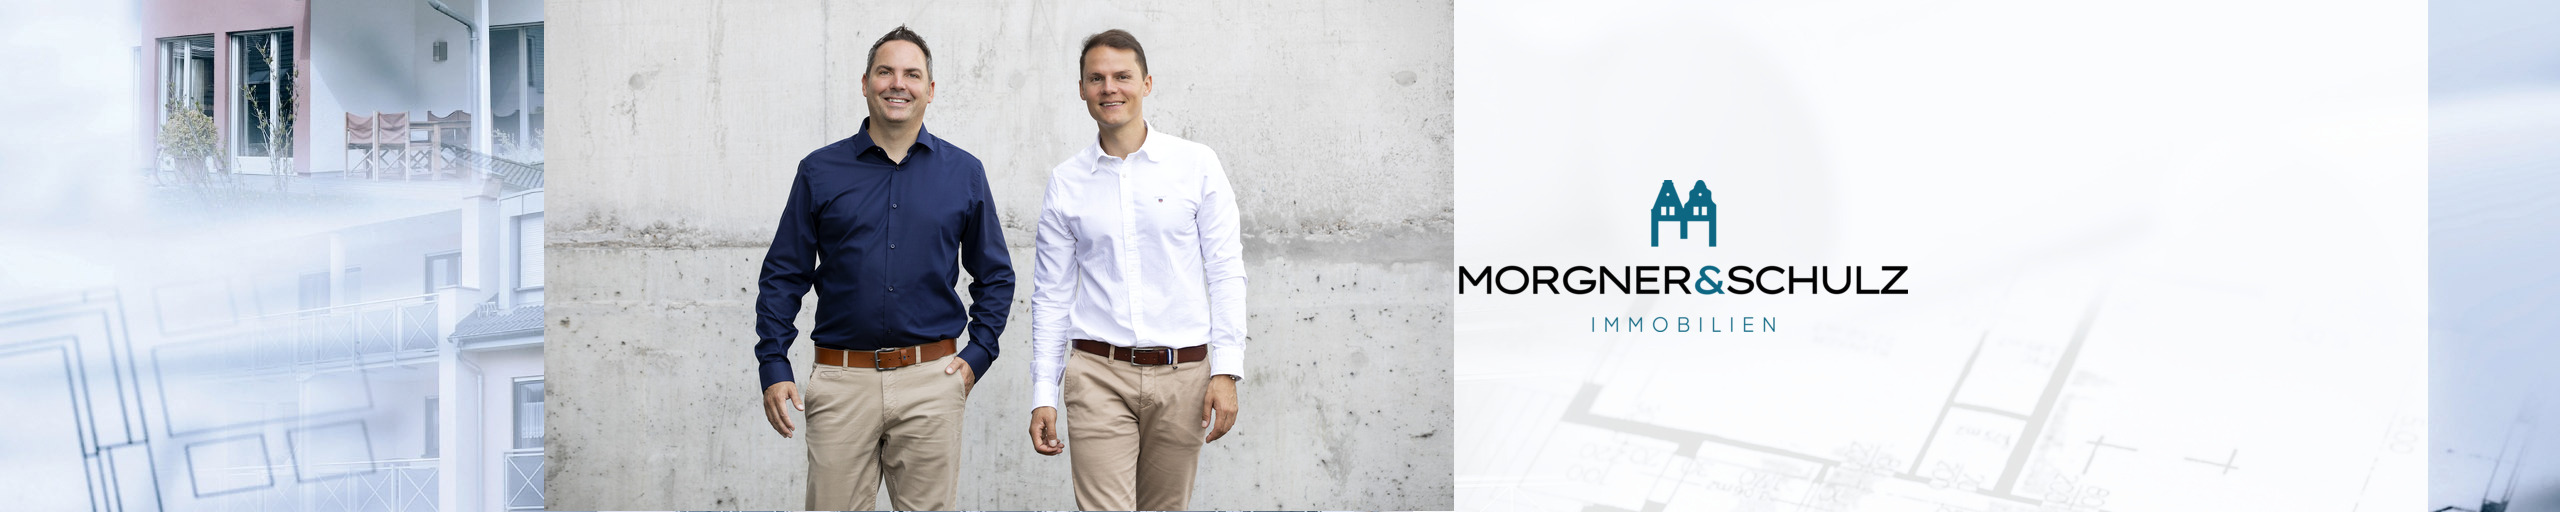 Morgner & Schulz Immobilien GmbH